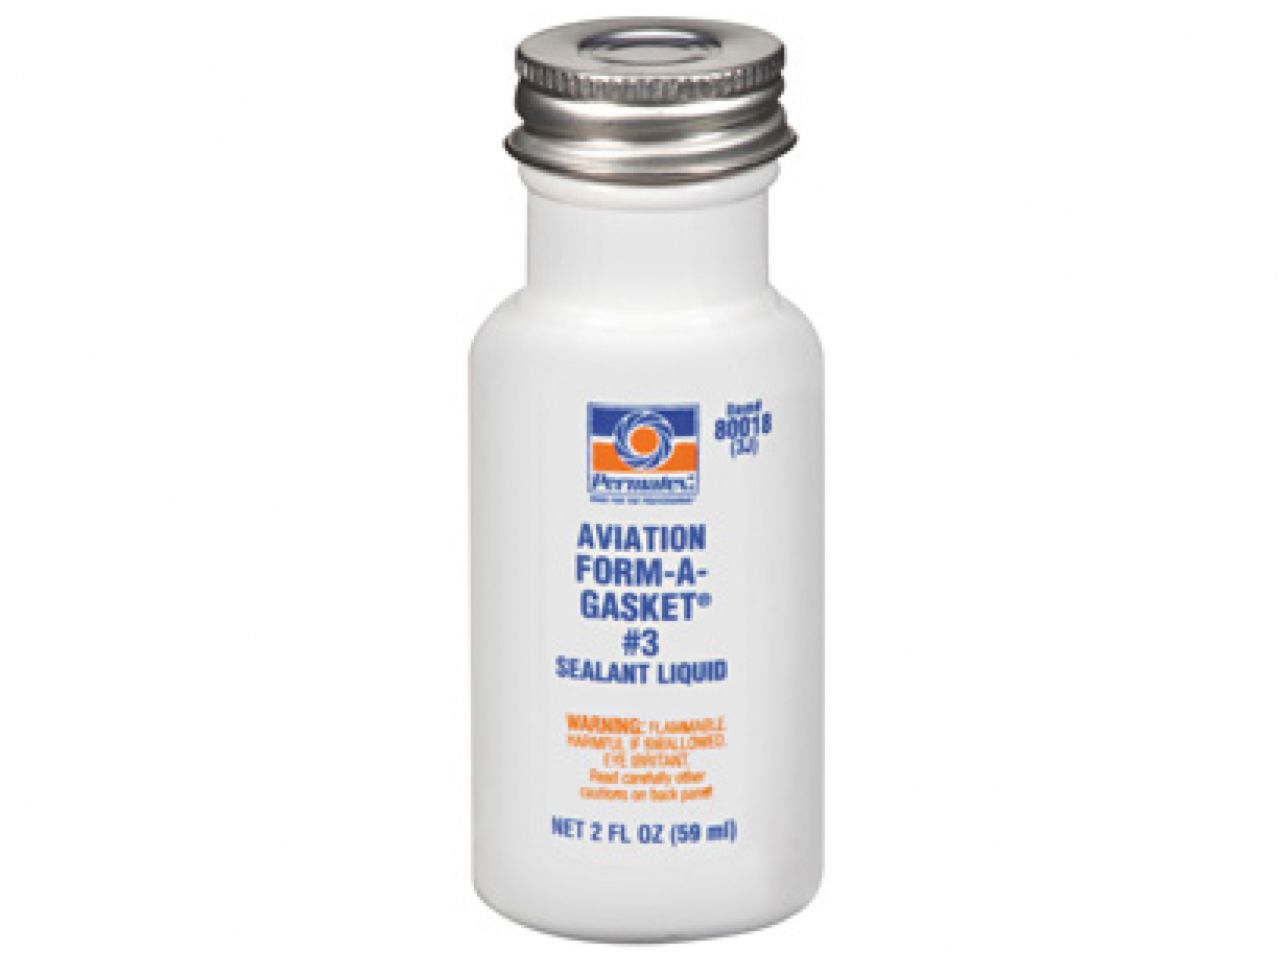 Permatex Aviation FORM-A-GASKET  #3 Sealant, 16 oz bottle, Each